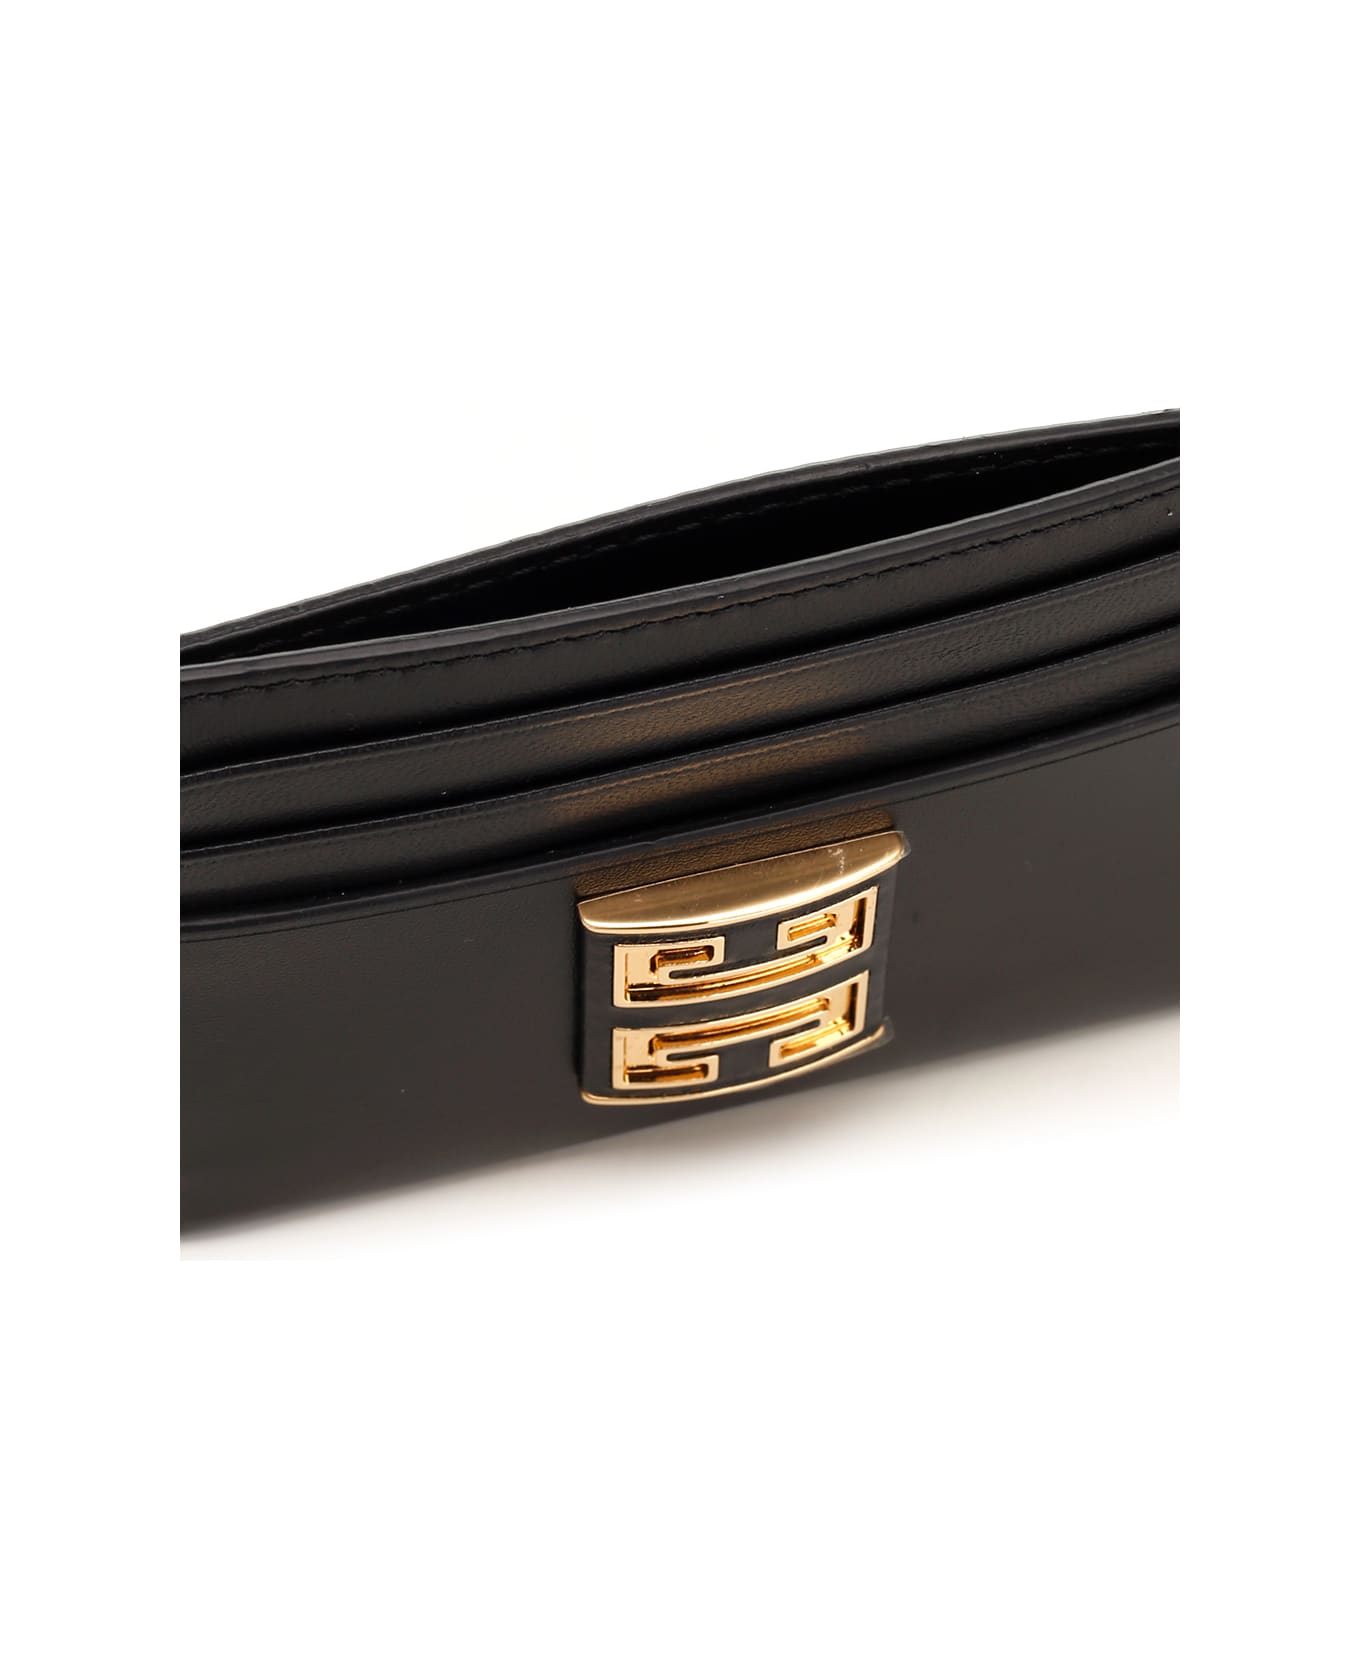 Givenchy 4g Card Case - Black 財布